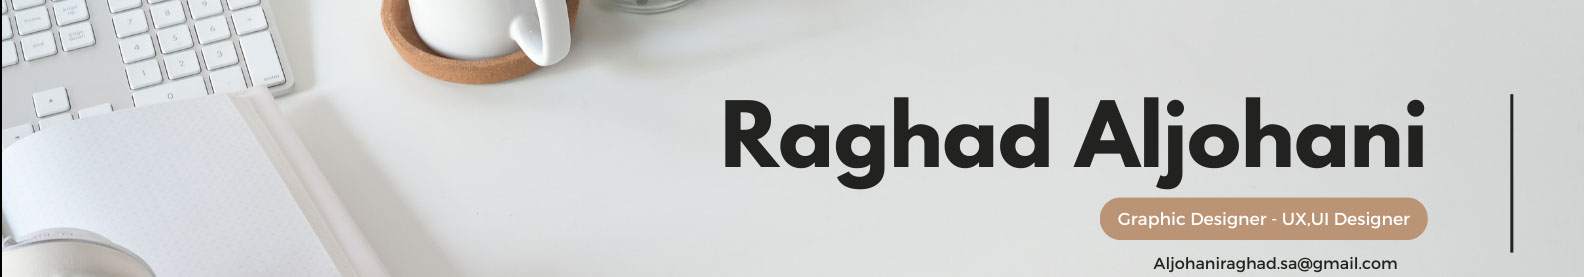 RAGHAD ALJOHANI's profile banner